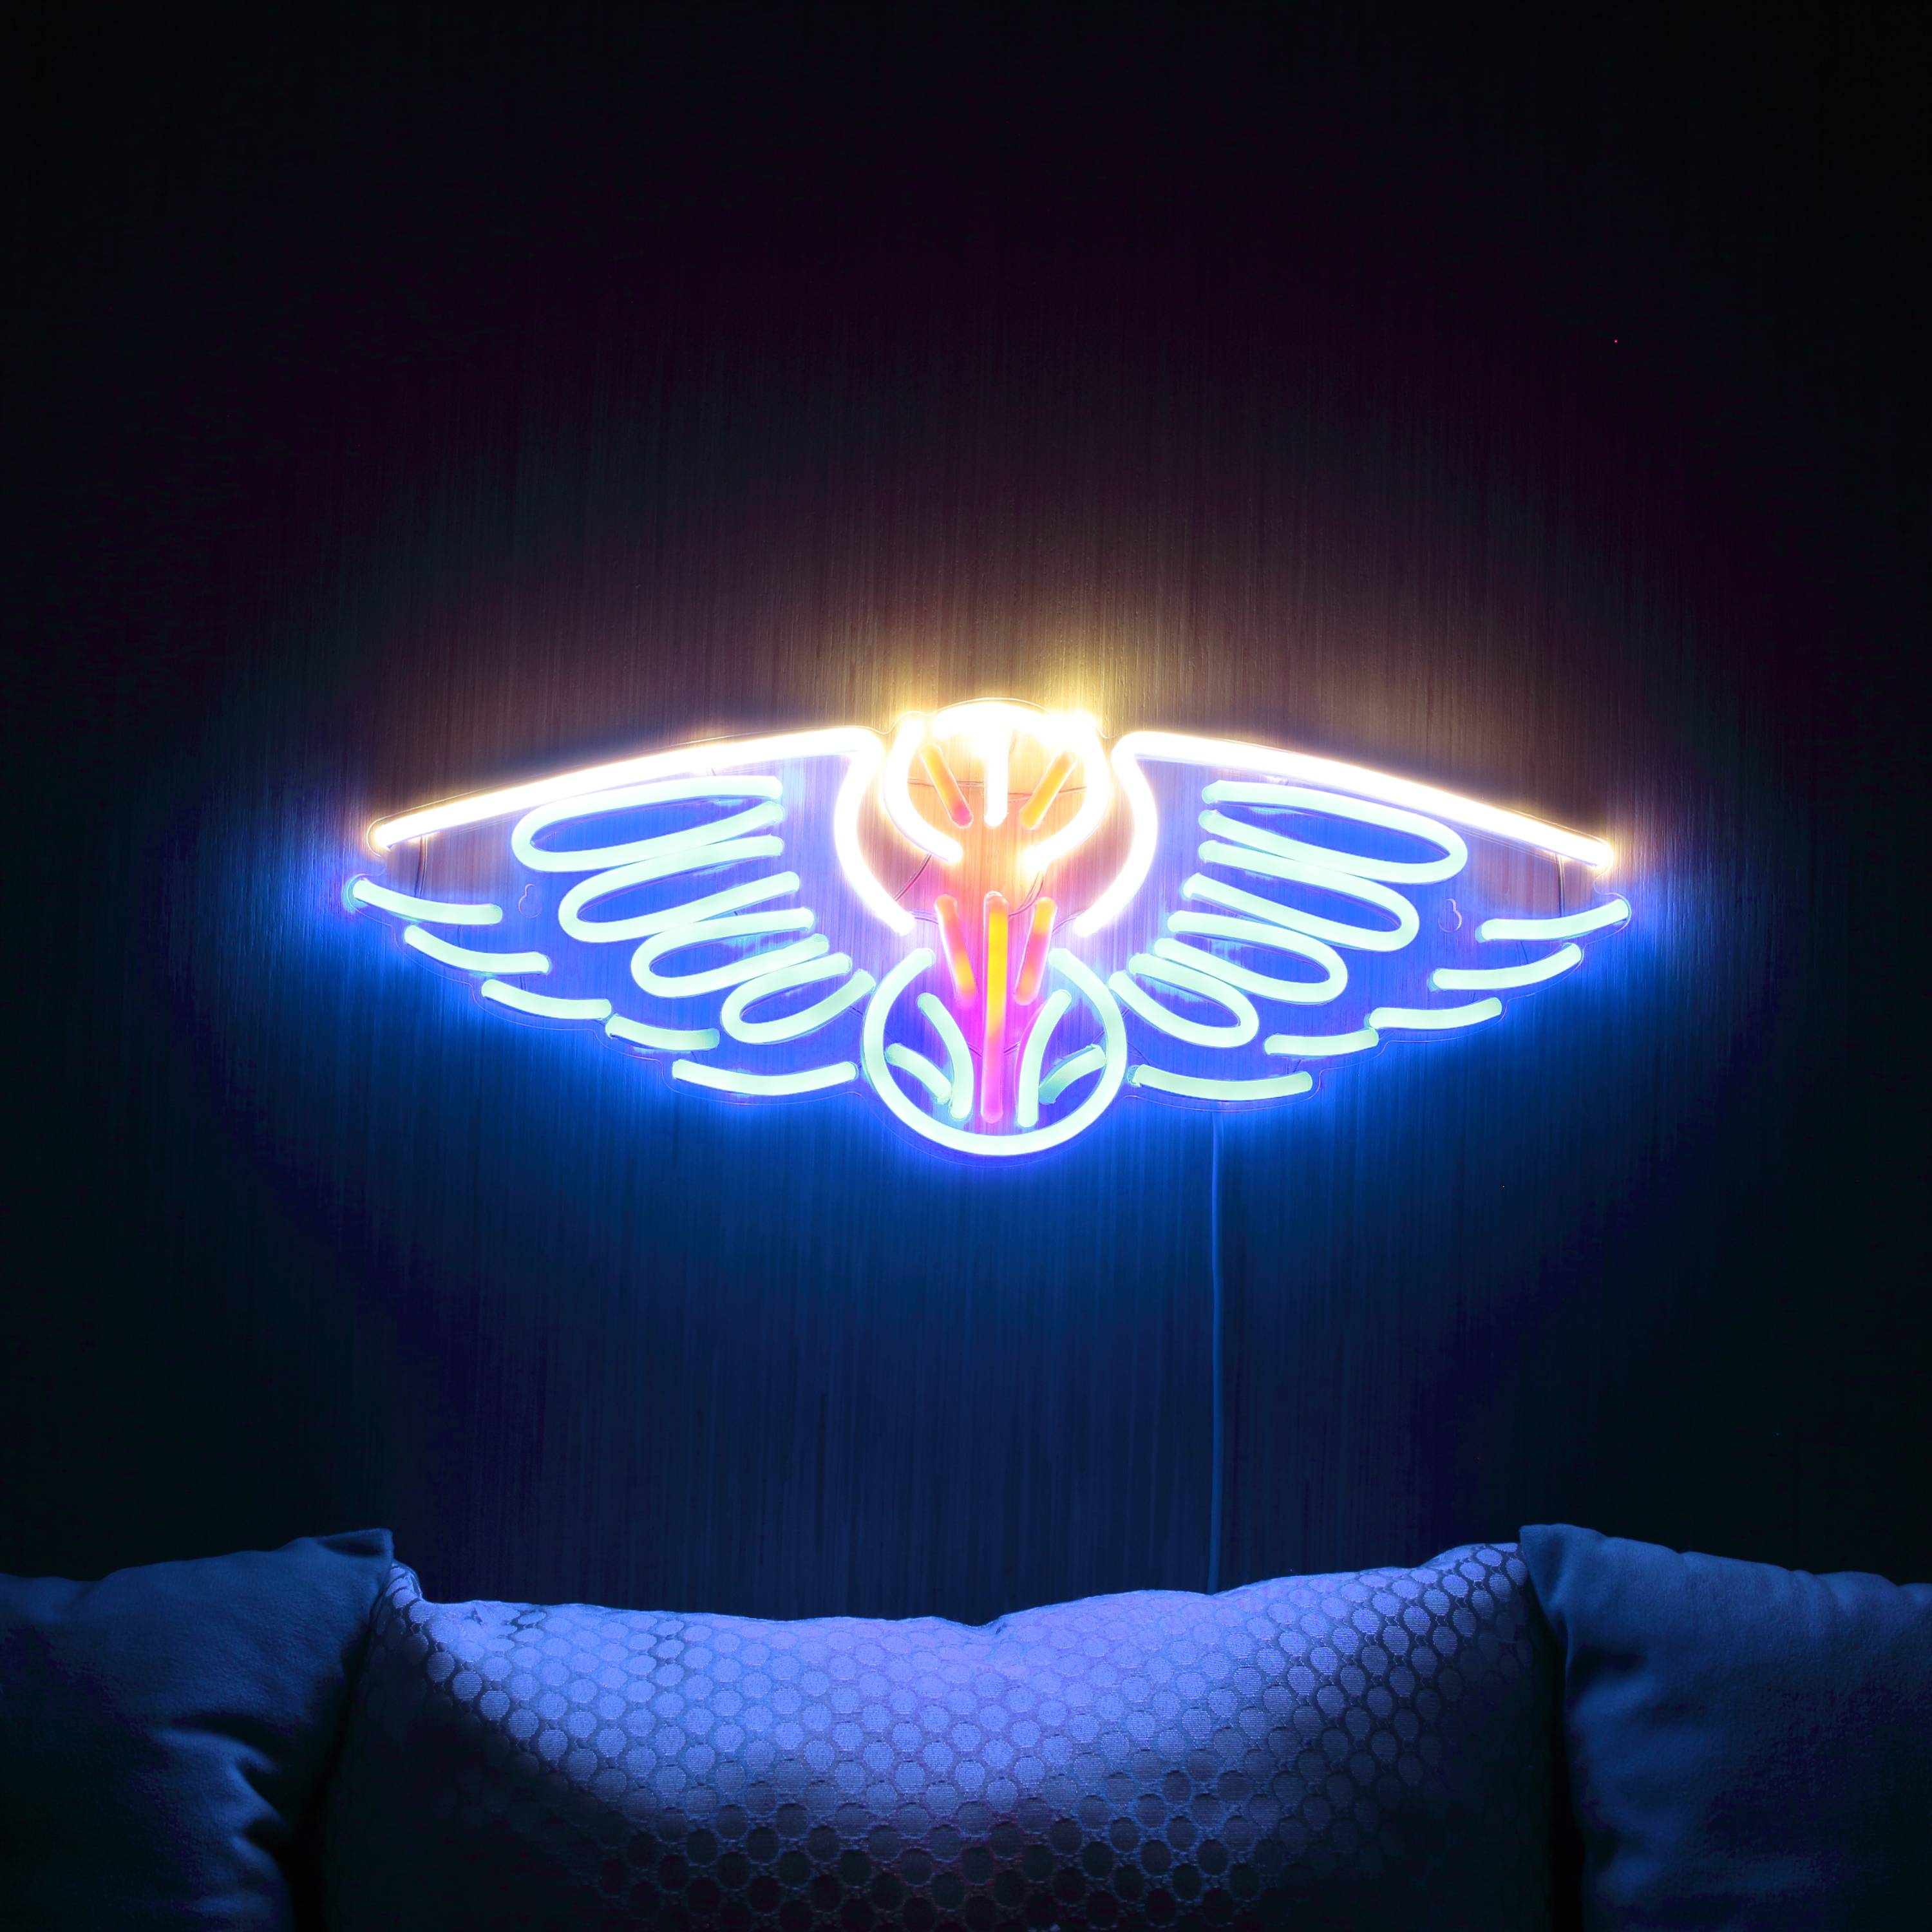 NBA New Orleans Pelicans Large Flex Neon LED Sign